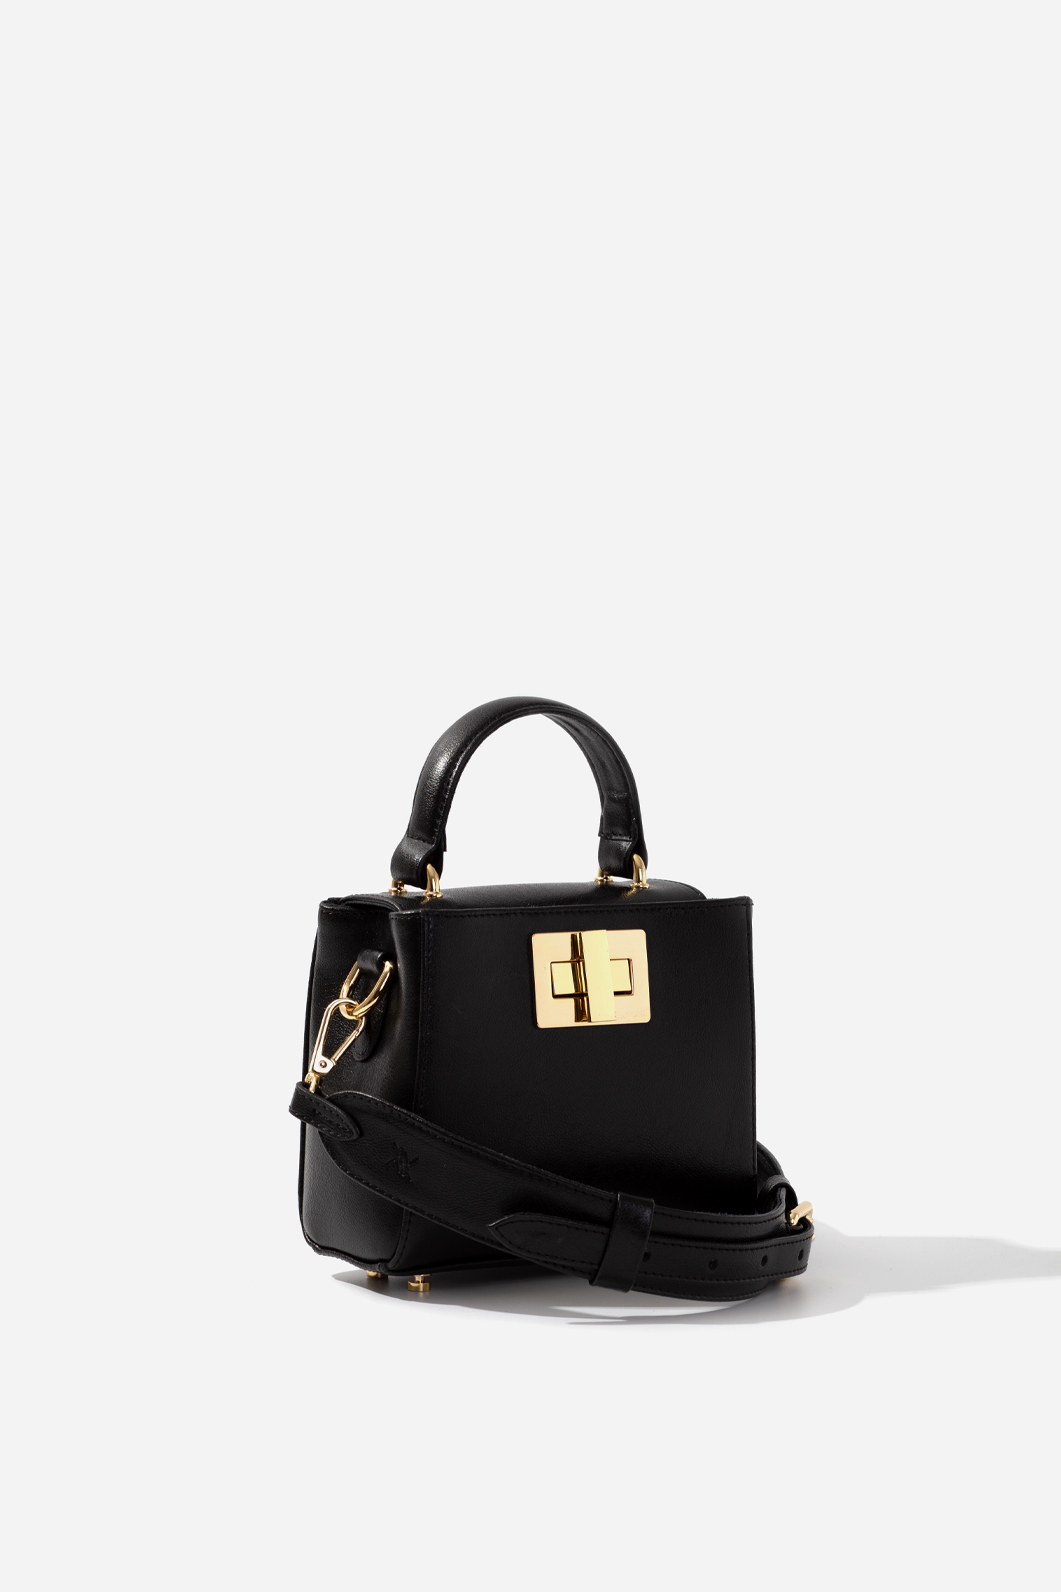 Erna micro New black leather bag /gold/